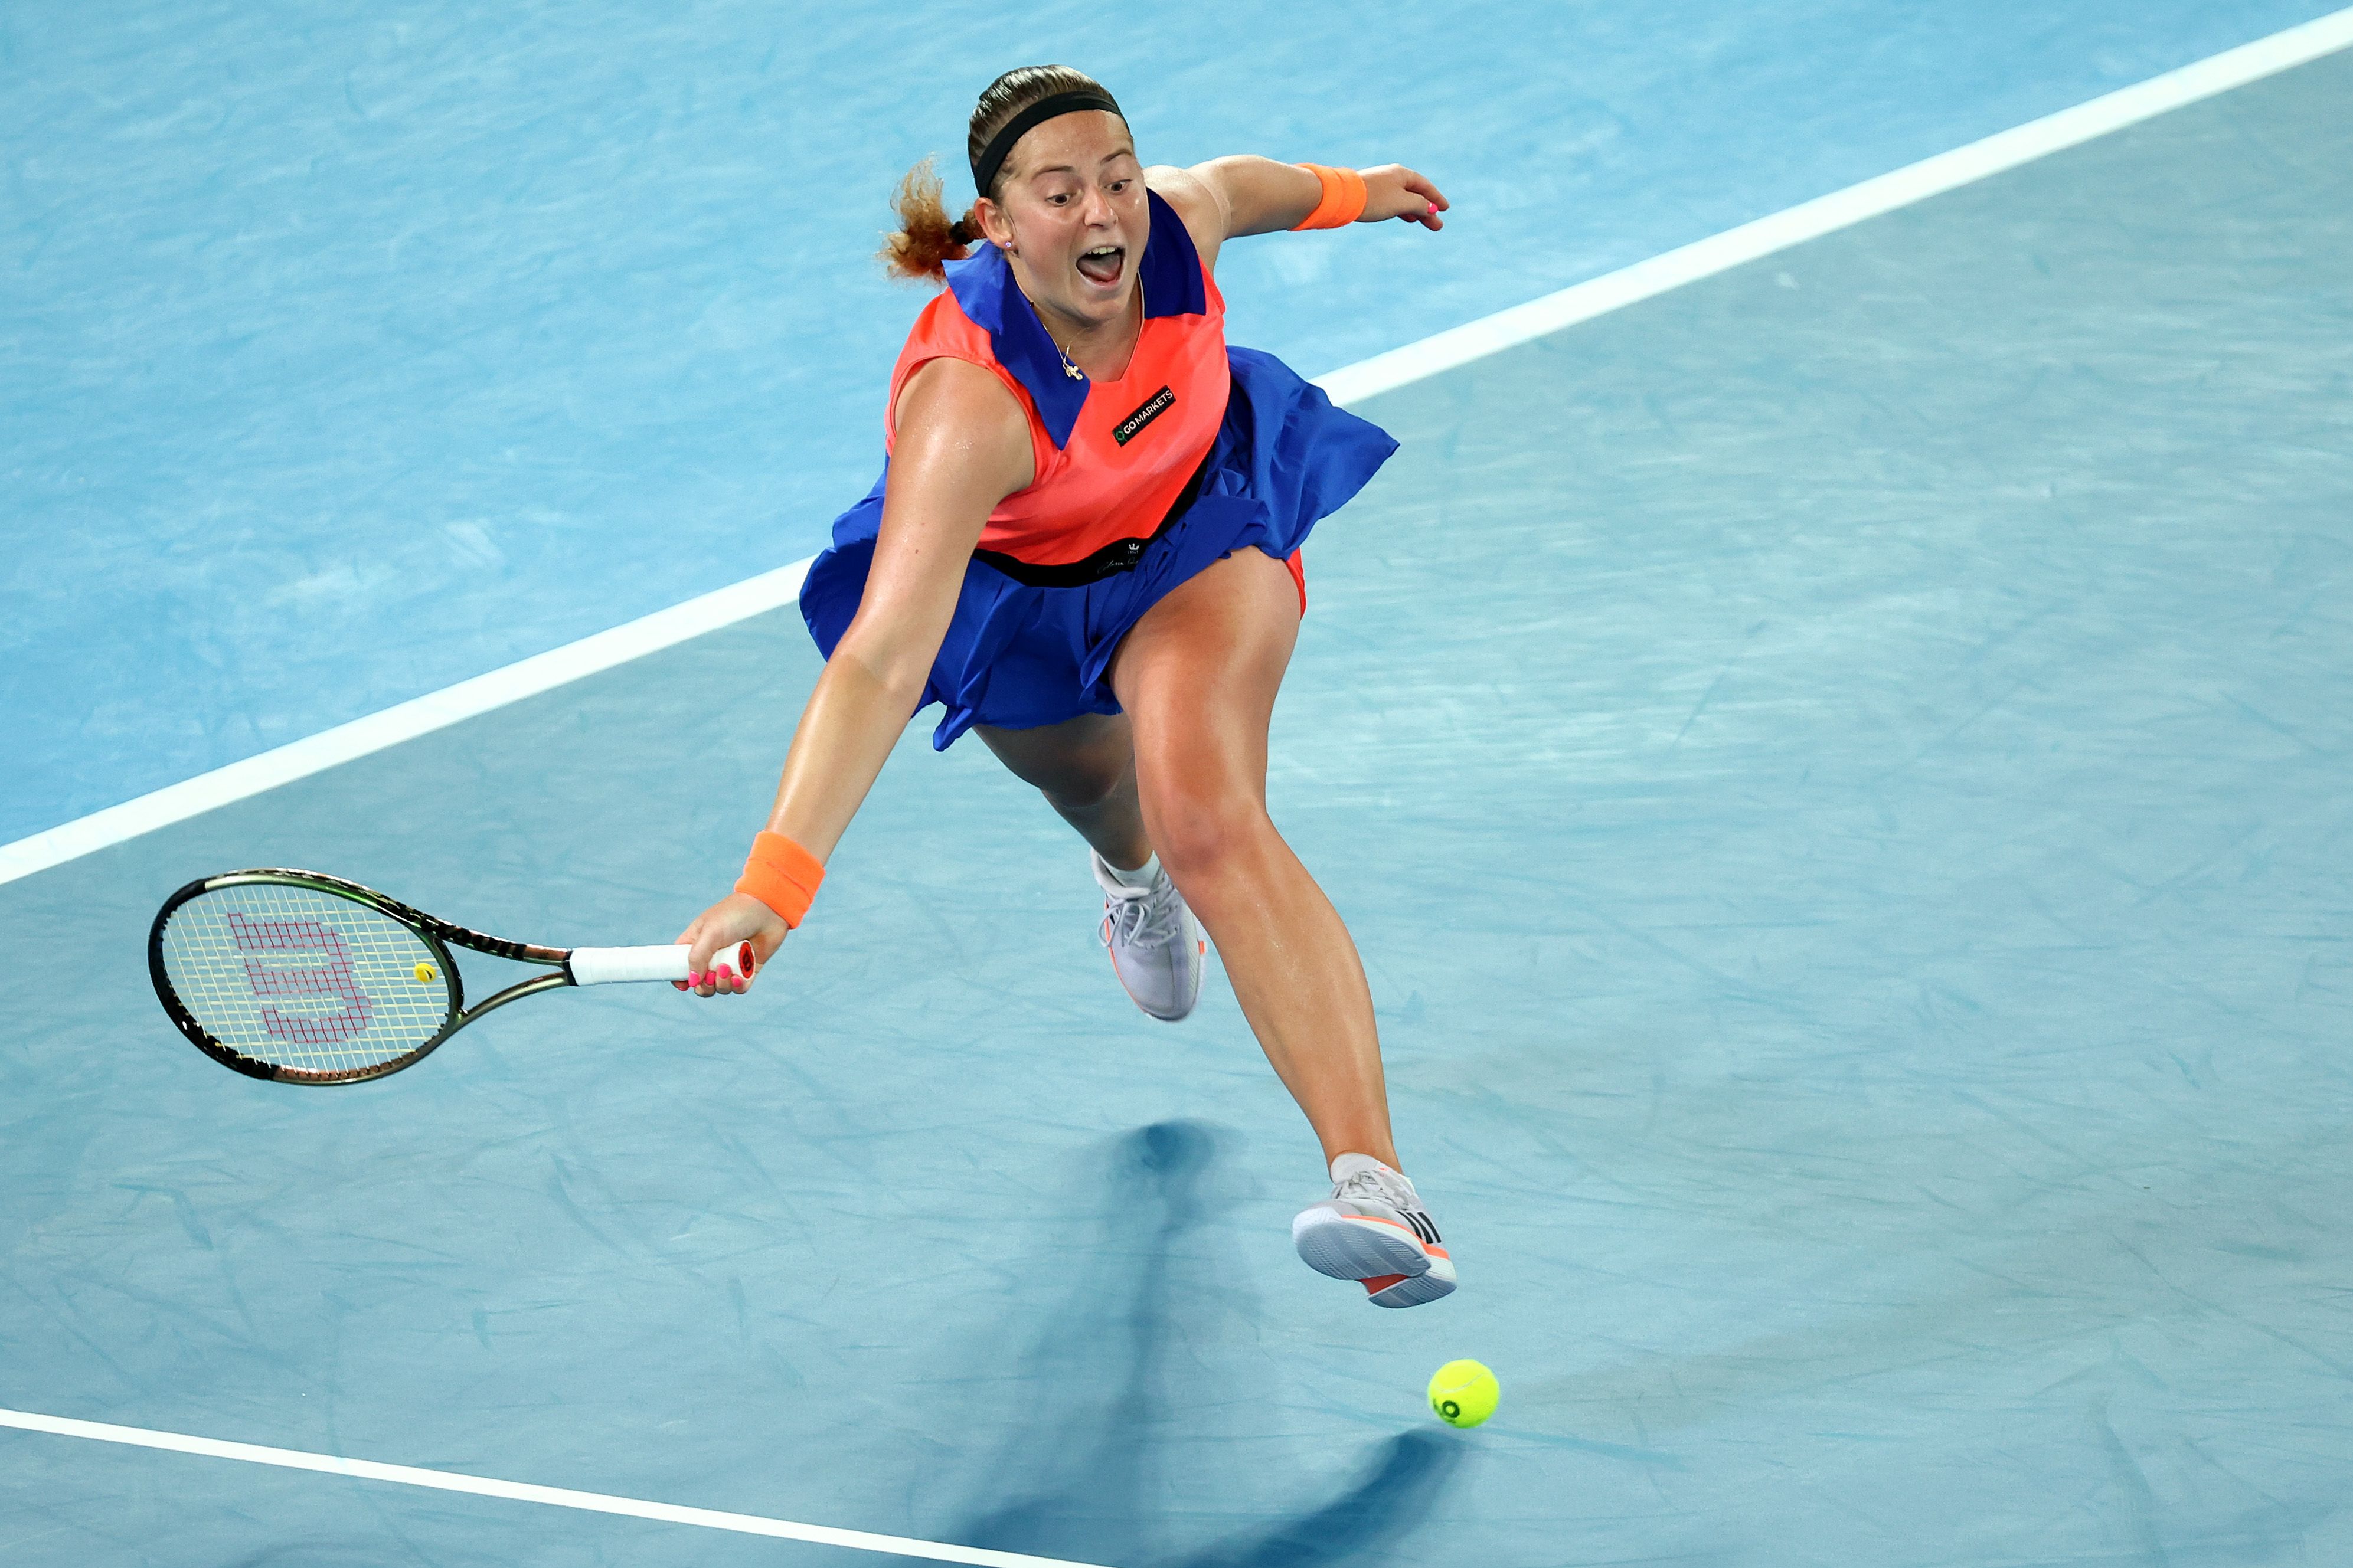 Jelena Ostapenko playing at the Australian Open